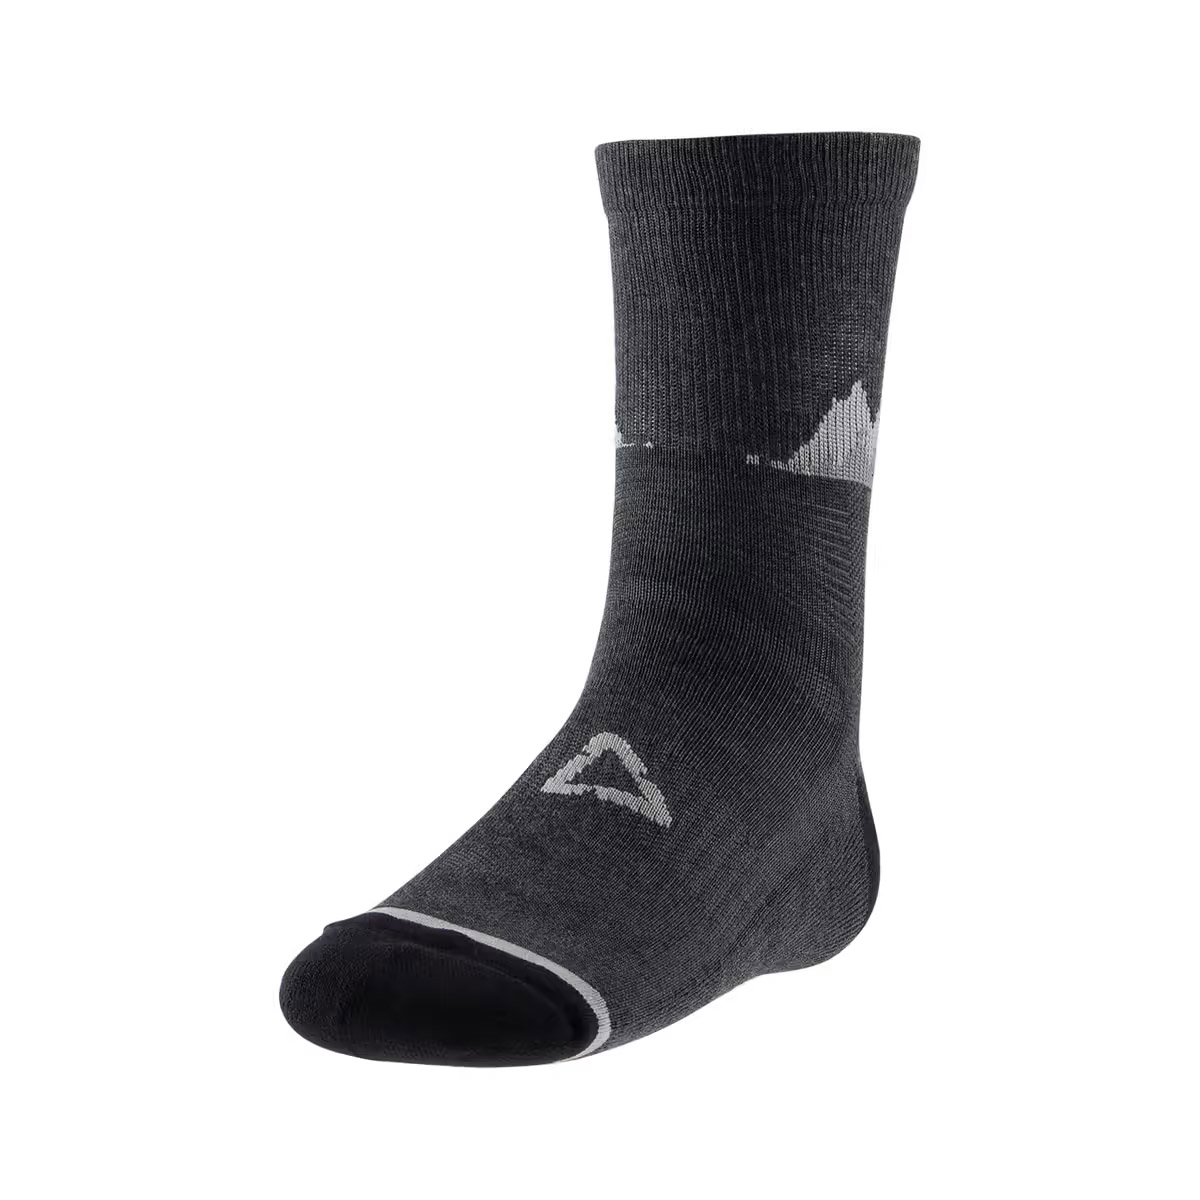 Reinforced Mtb Socks Grey Size S/M (38-42